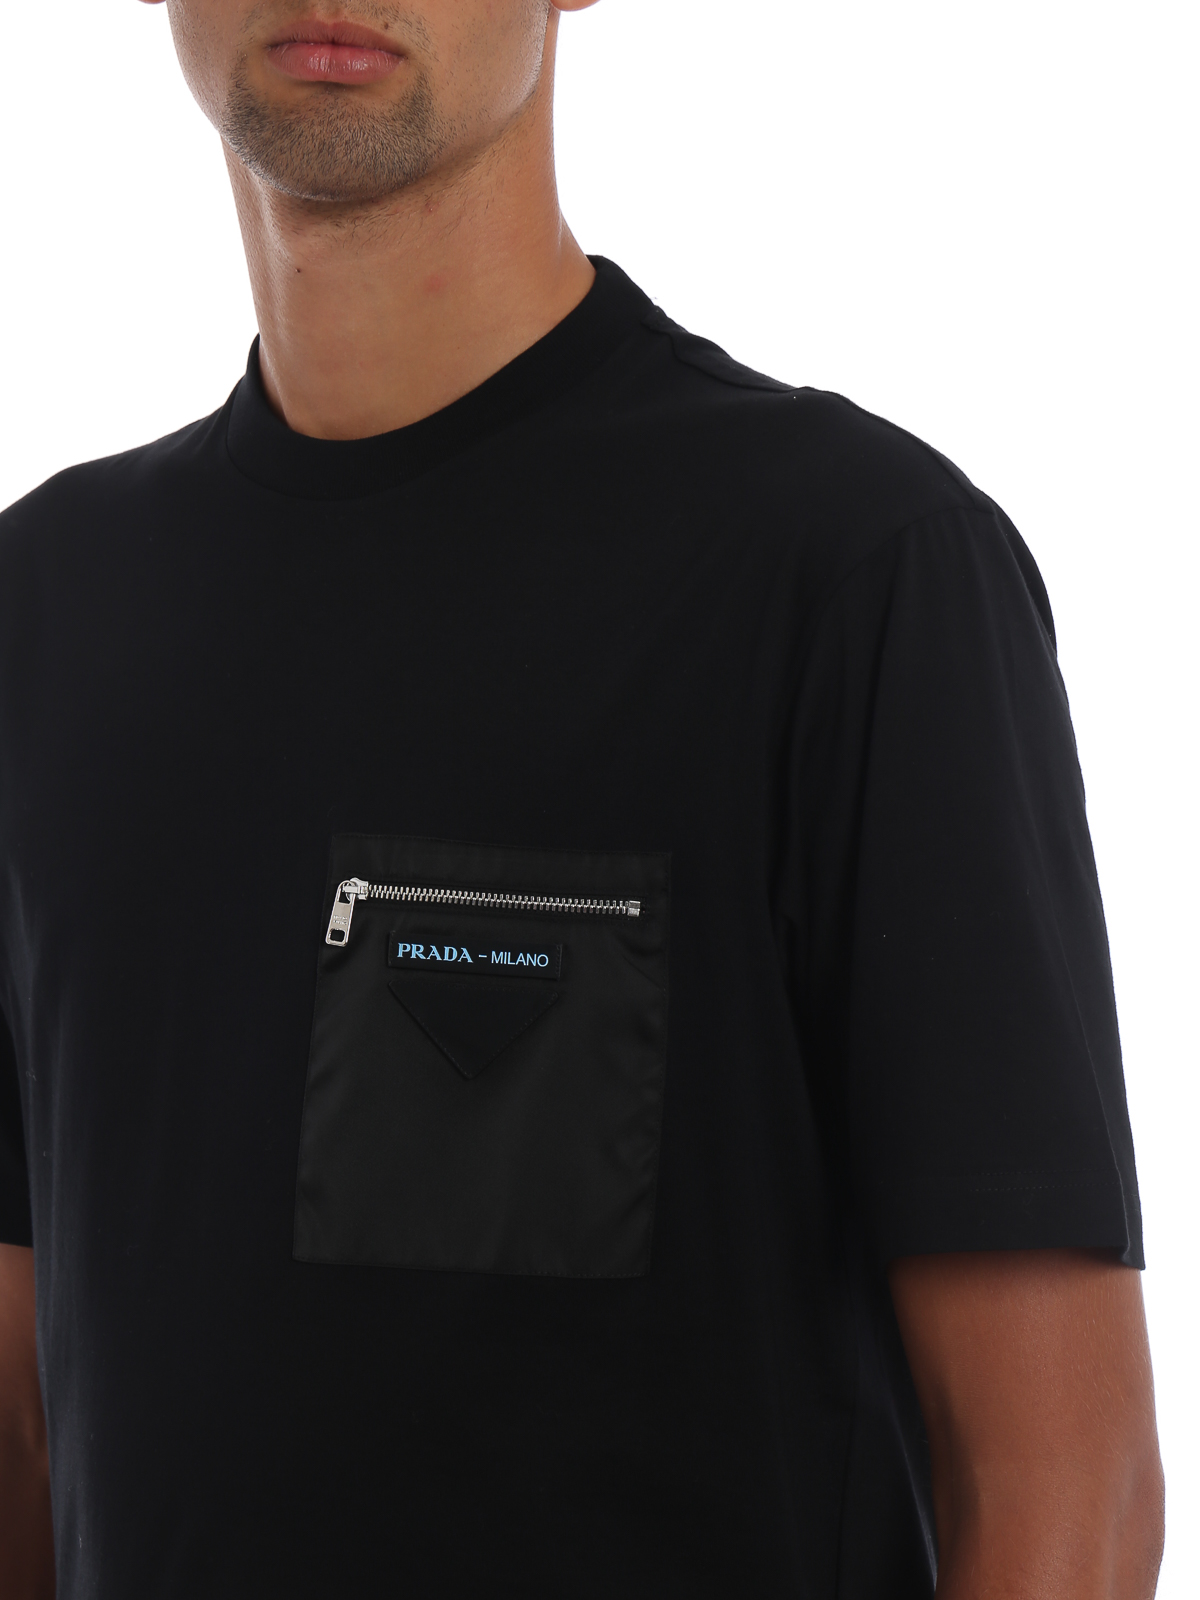 Tシャツ Prada - Tシャツ - 黒 - UJN5101R4F002 | iKRIX shop online